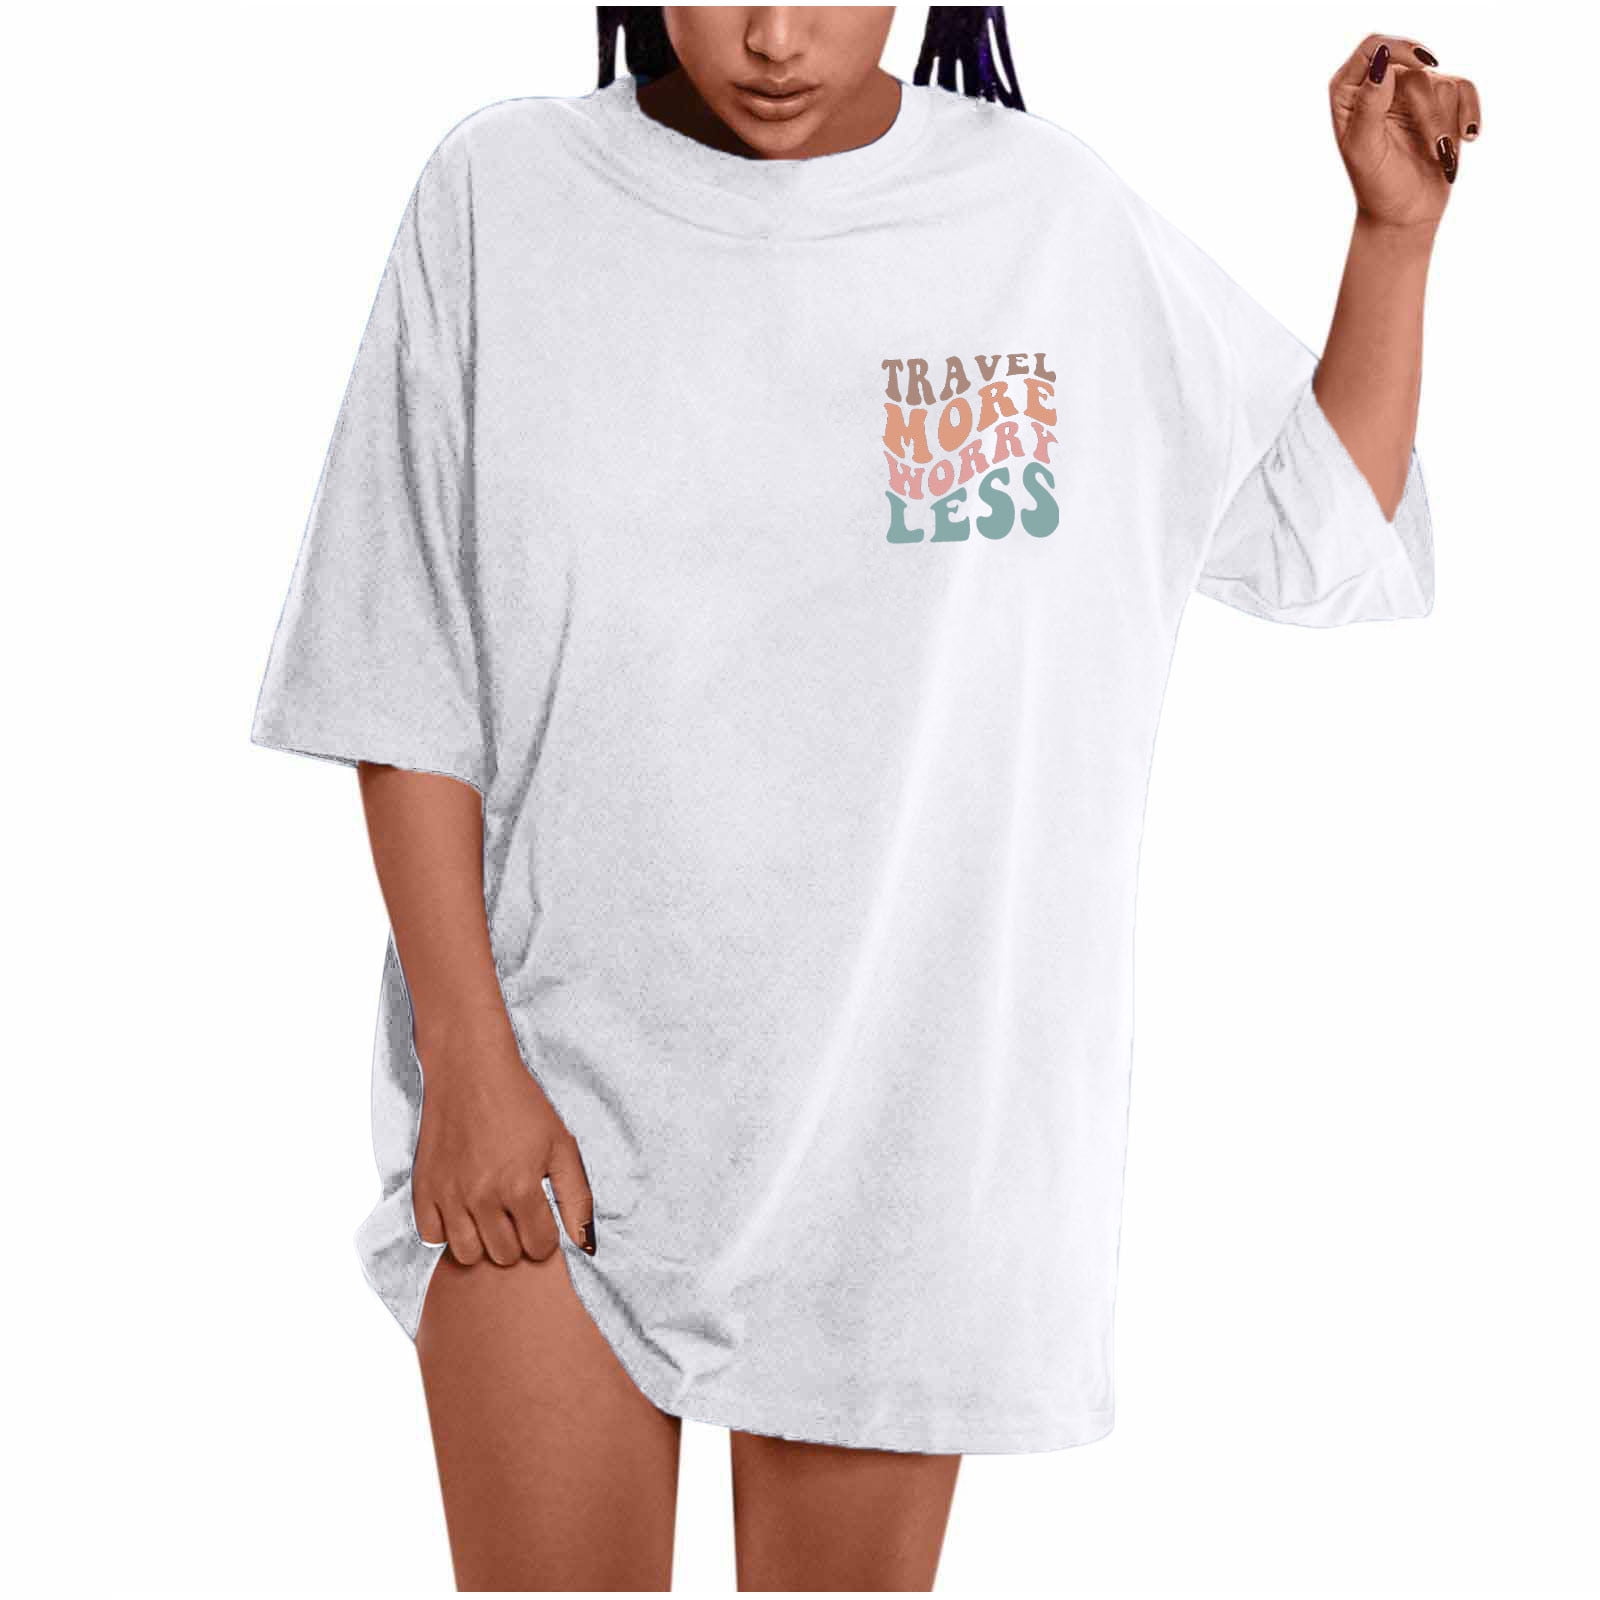 Olyvenn Reduced Slogan Graphic Oversized Shirts for Women TRAVEL